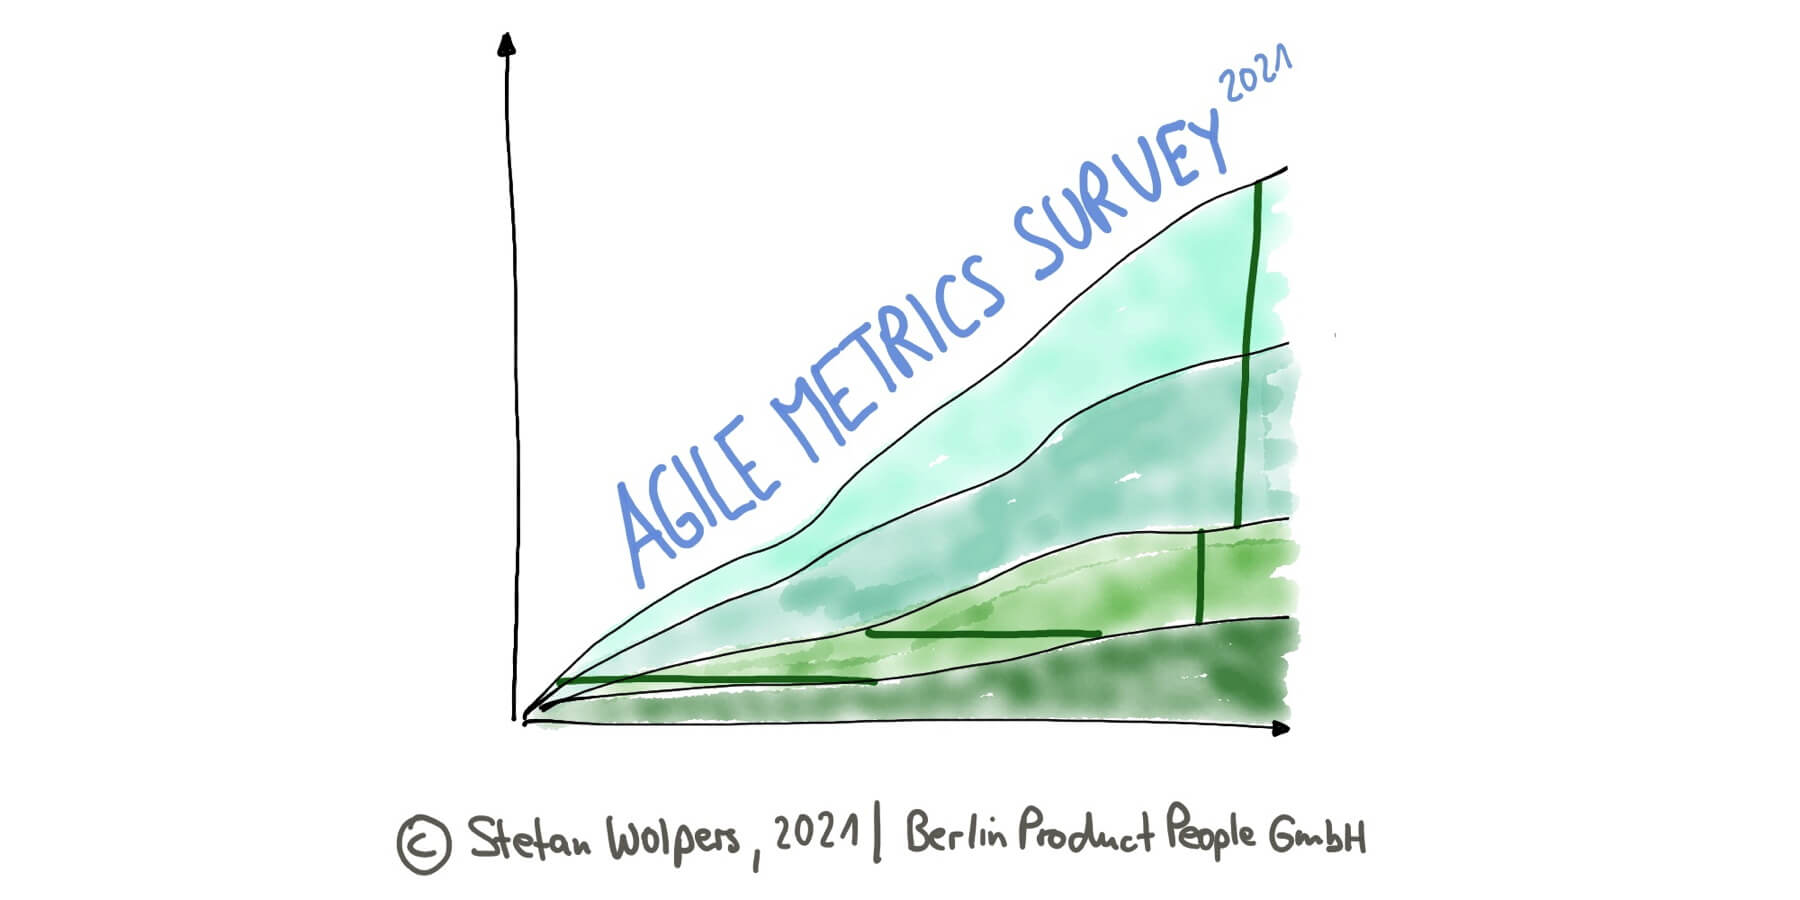 The Agile Metrics Survey 2021 — Berlin Product People GmbH